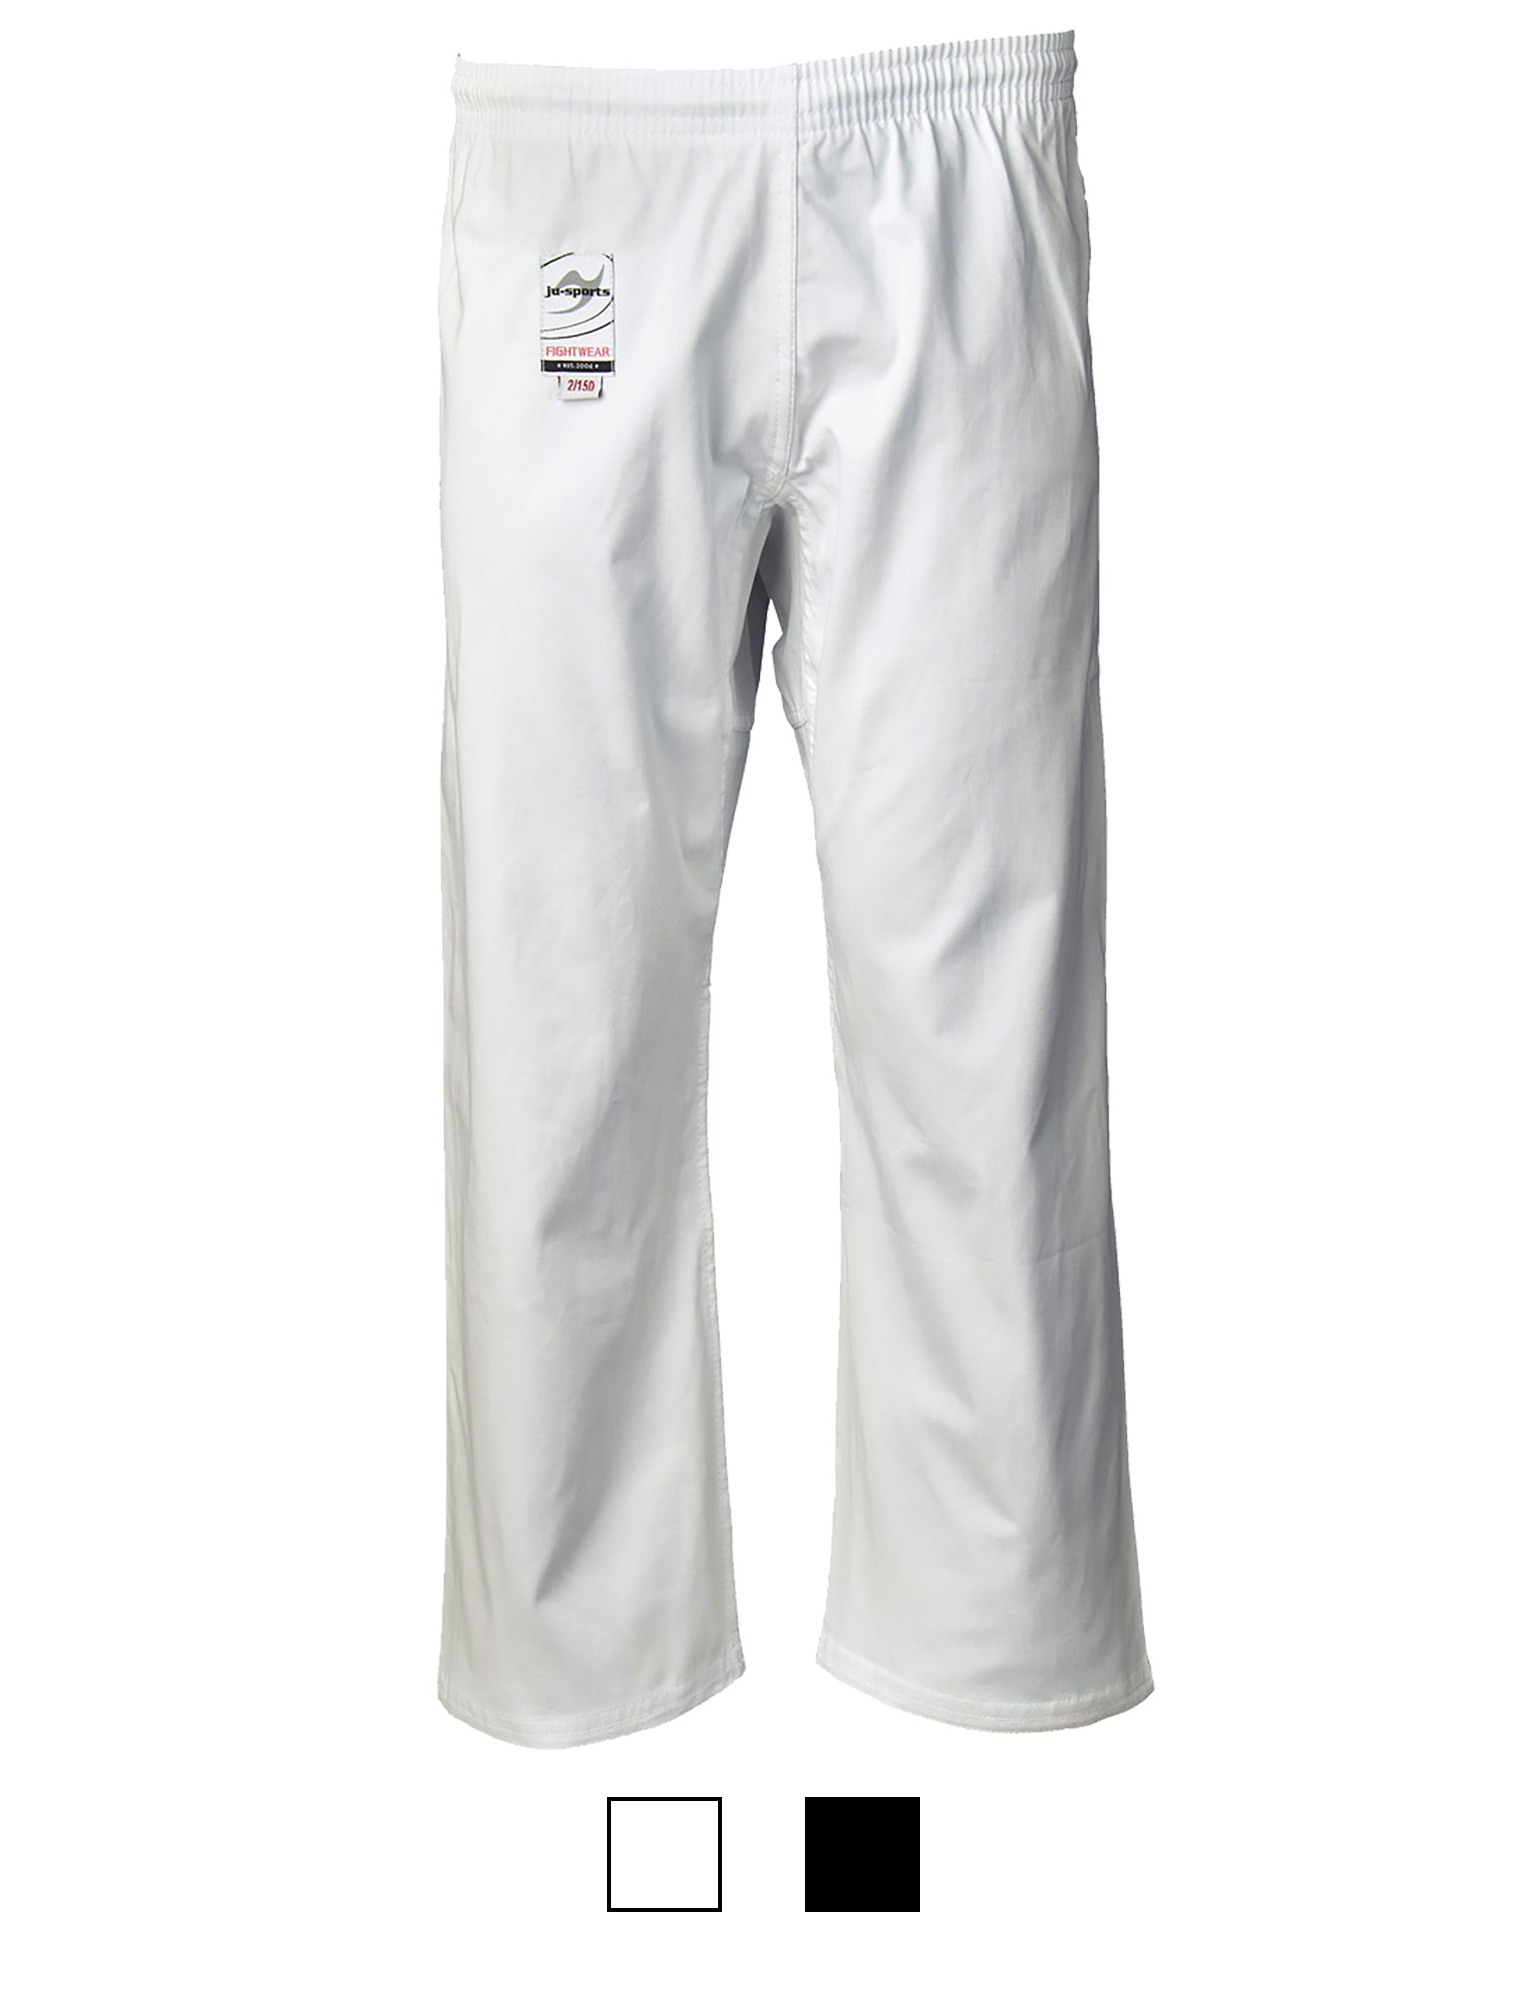 Ju-Sports Karate Pants white